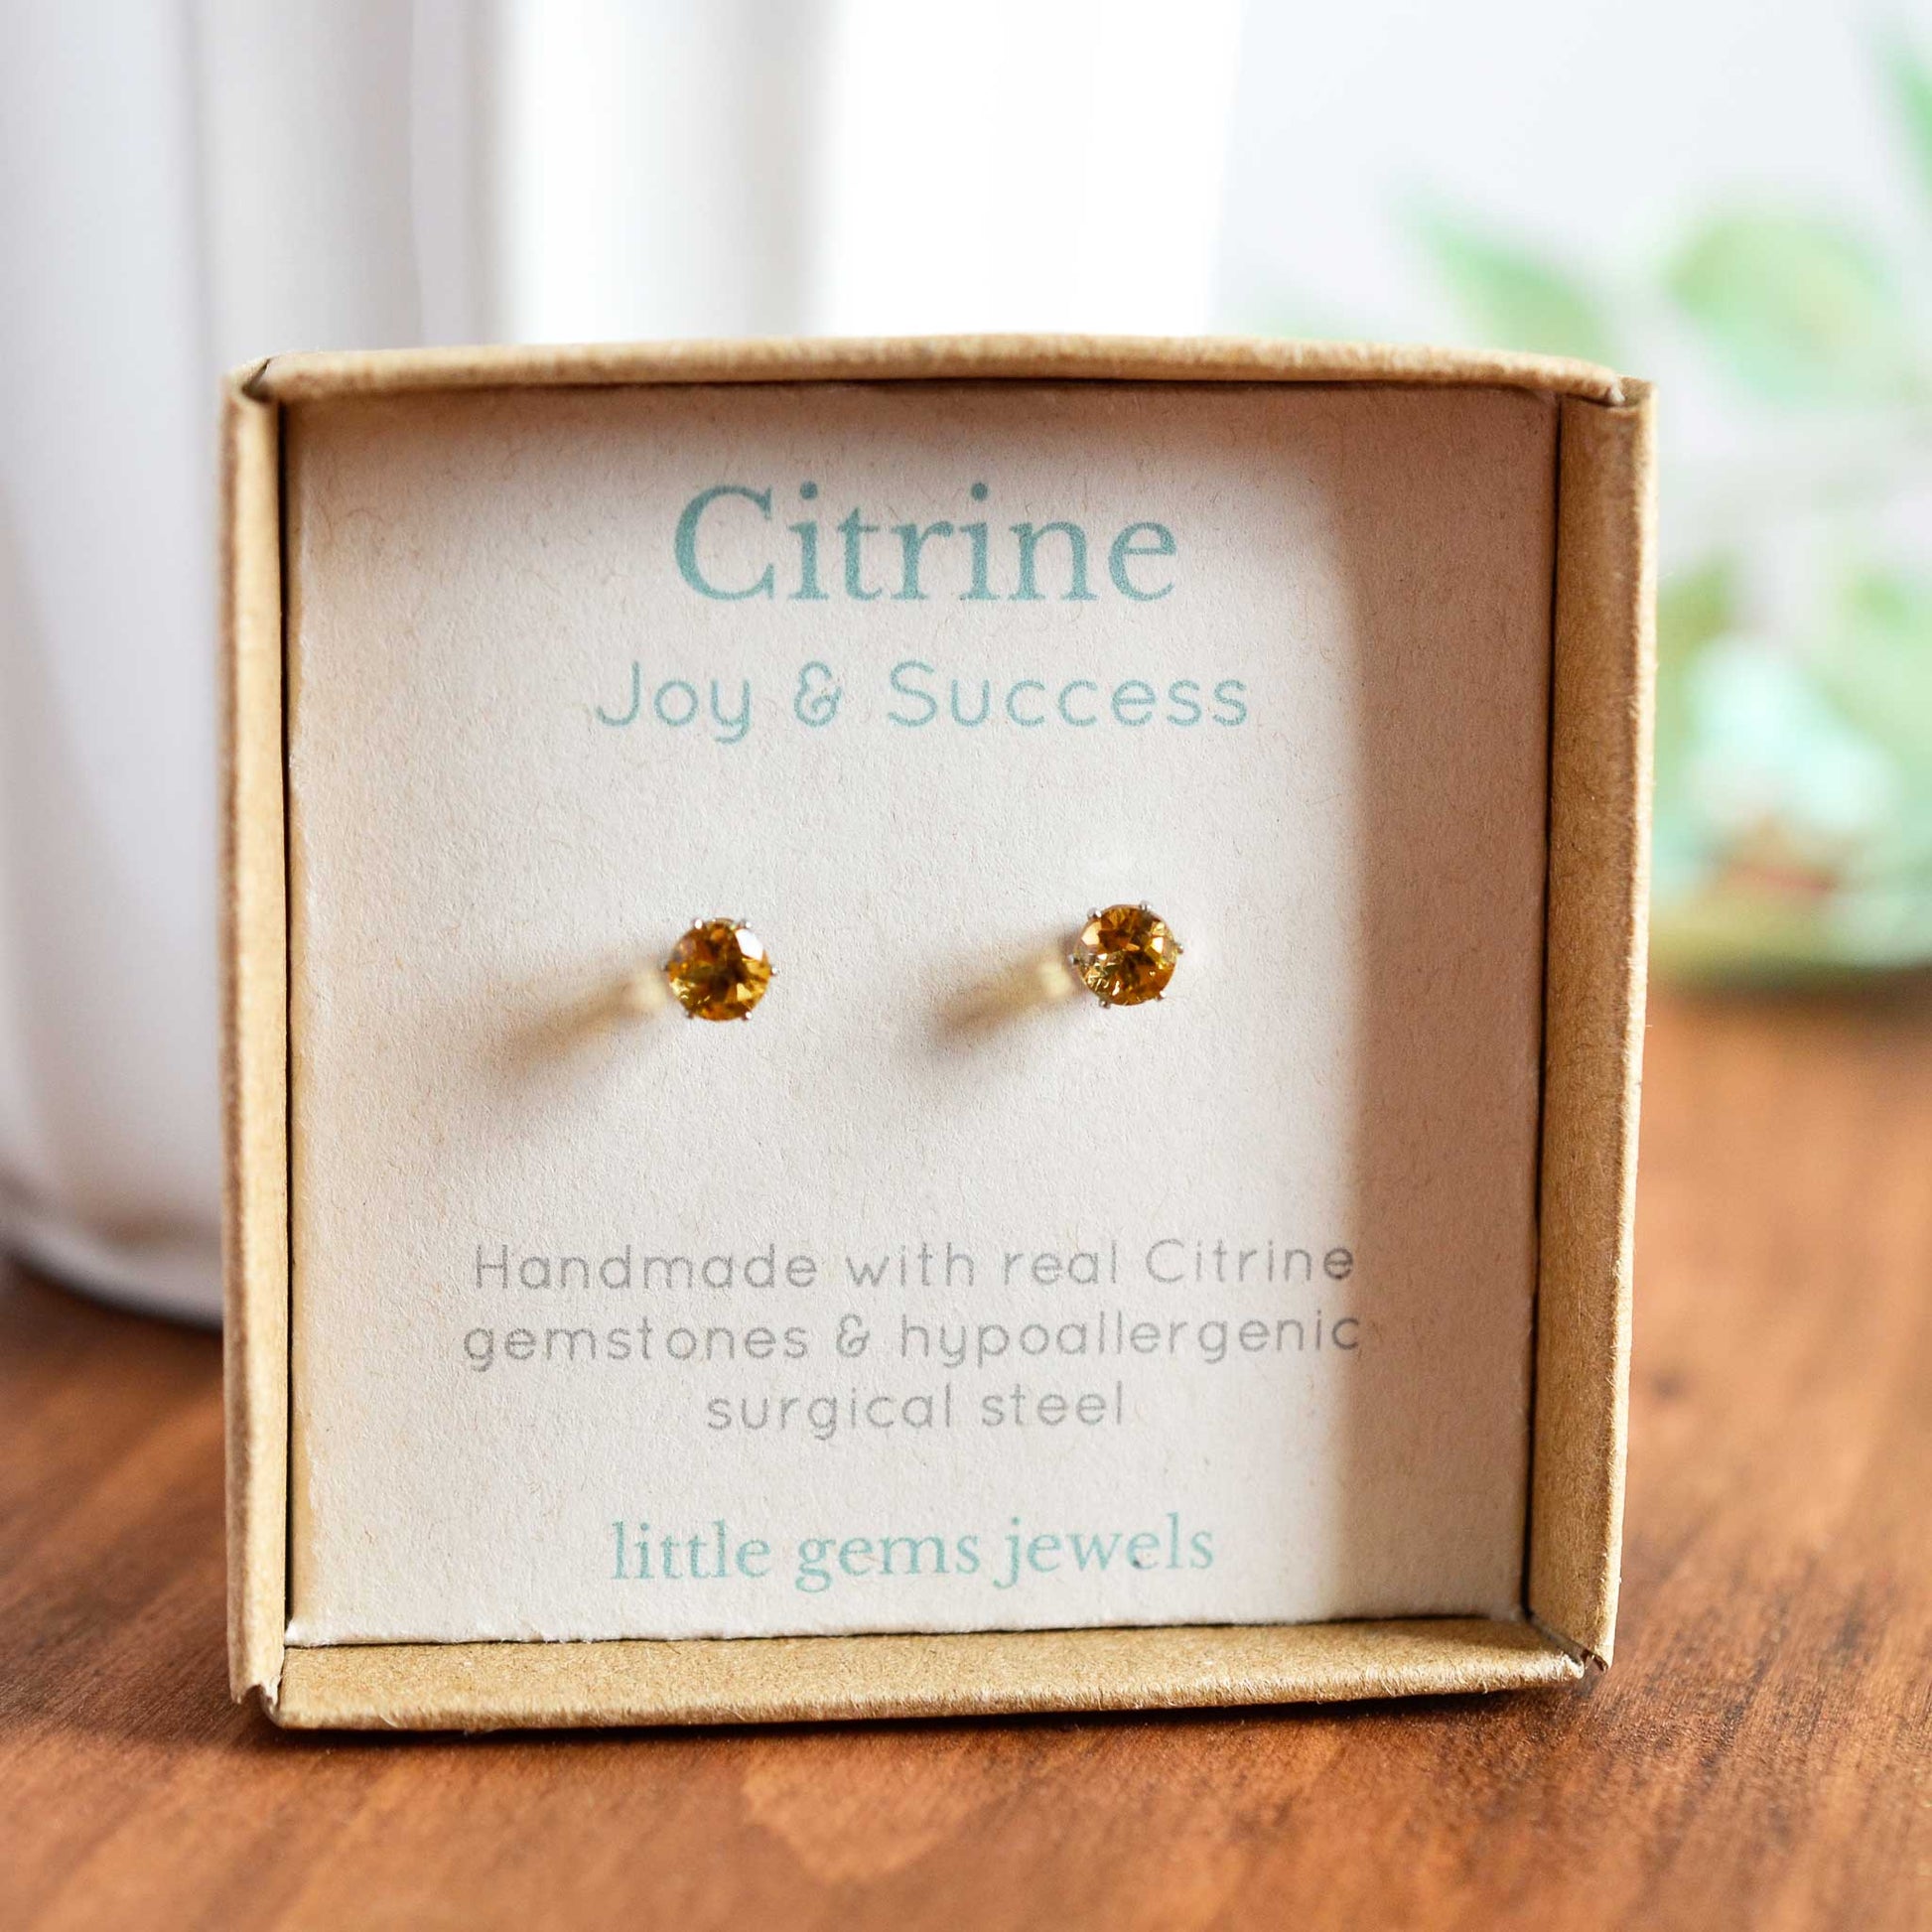 Tiny Citrine gemstone stud earrings in gift box